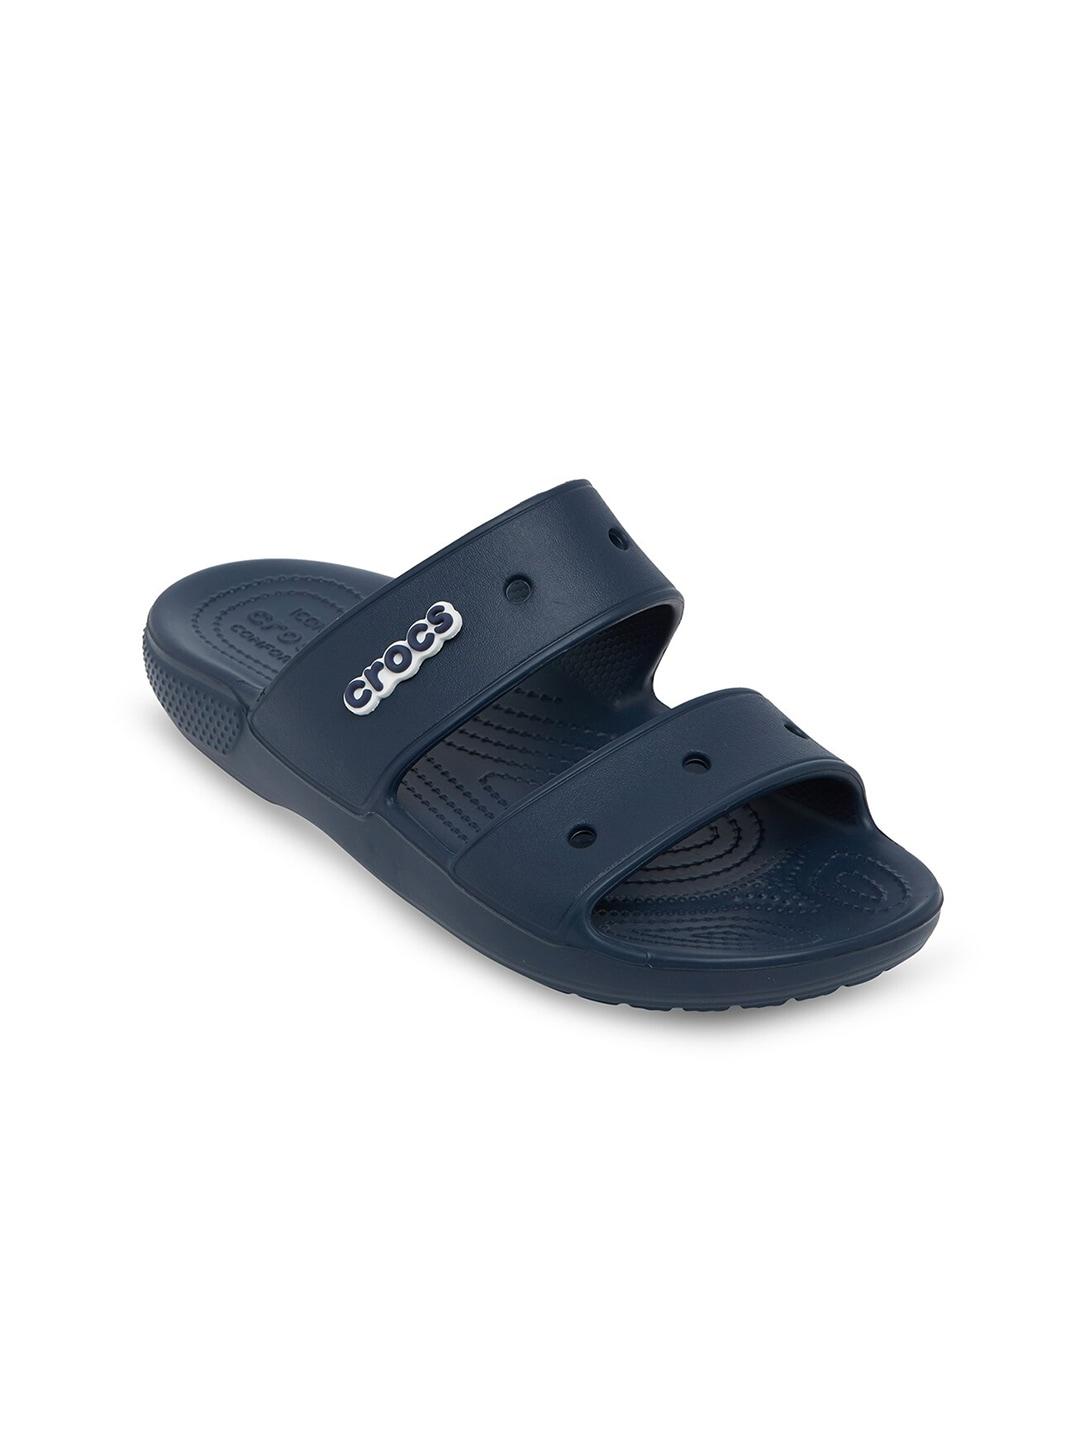 Crocs Classic Unisex Navy Blue Comfort Sandals